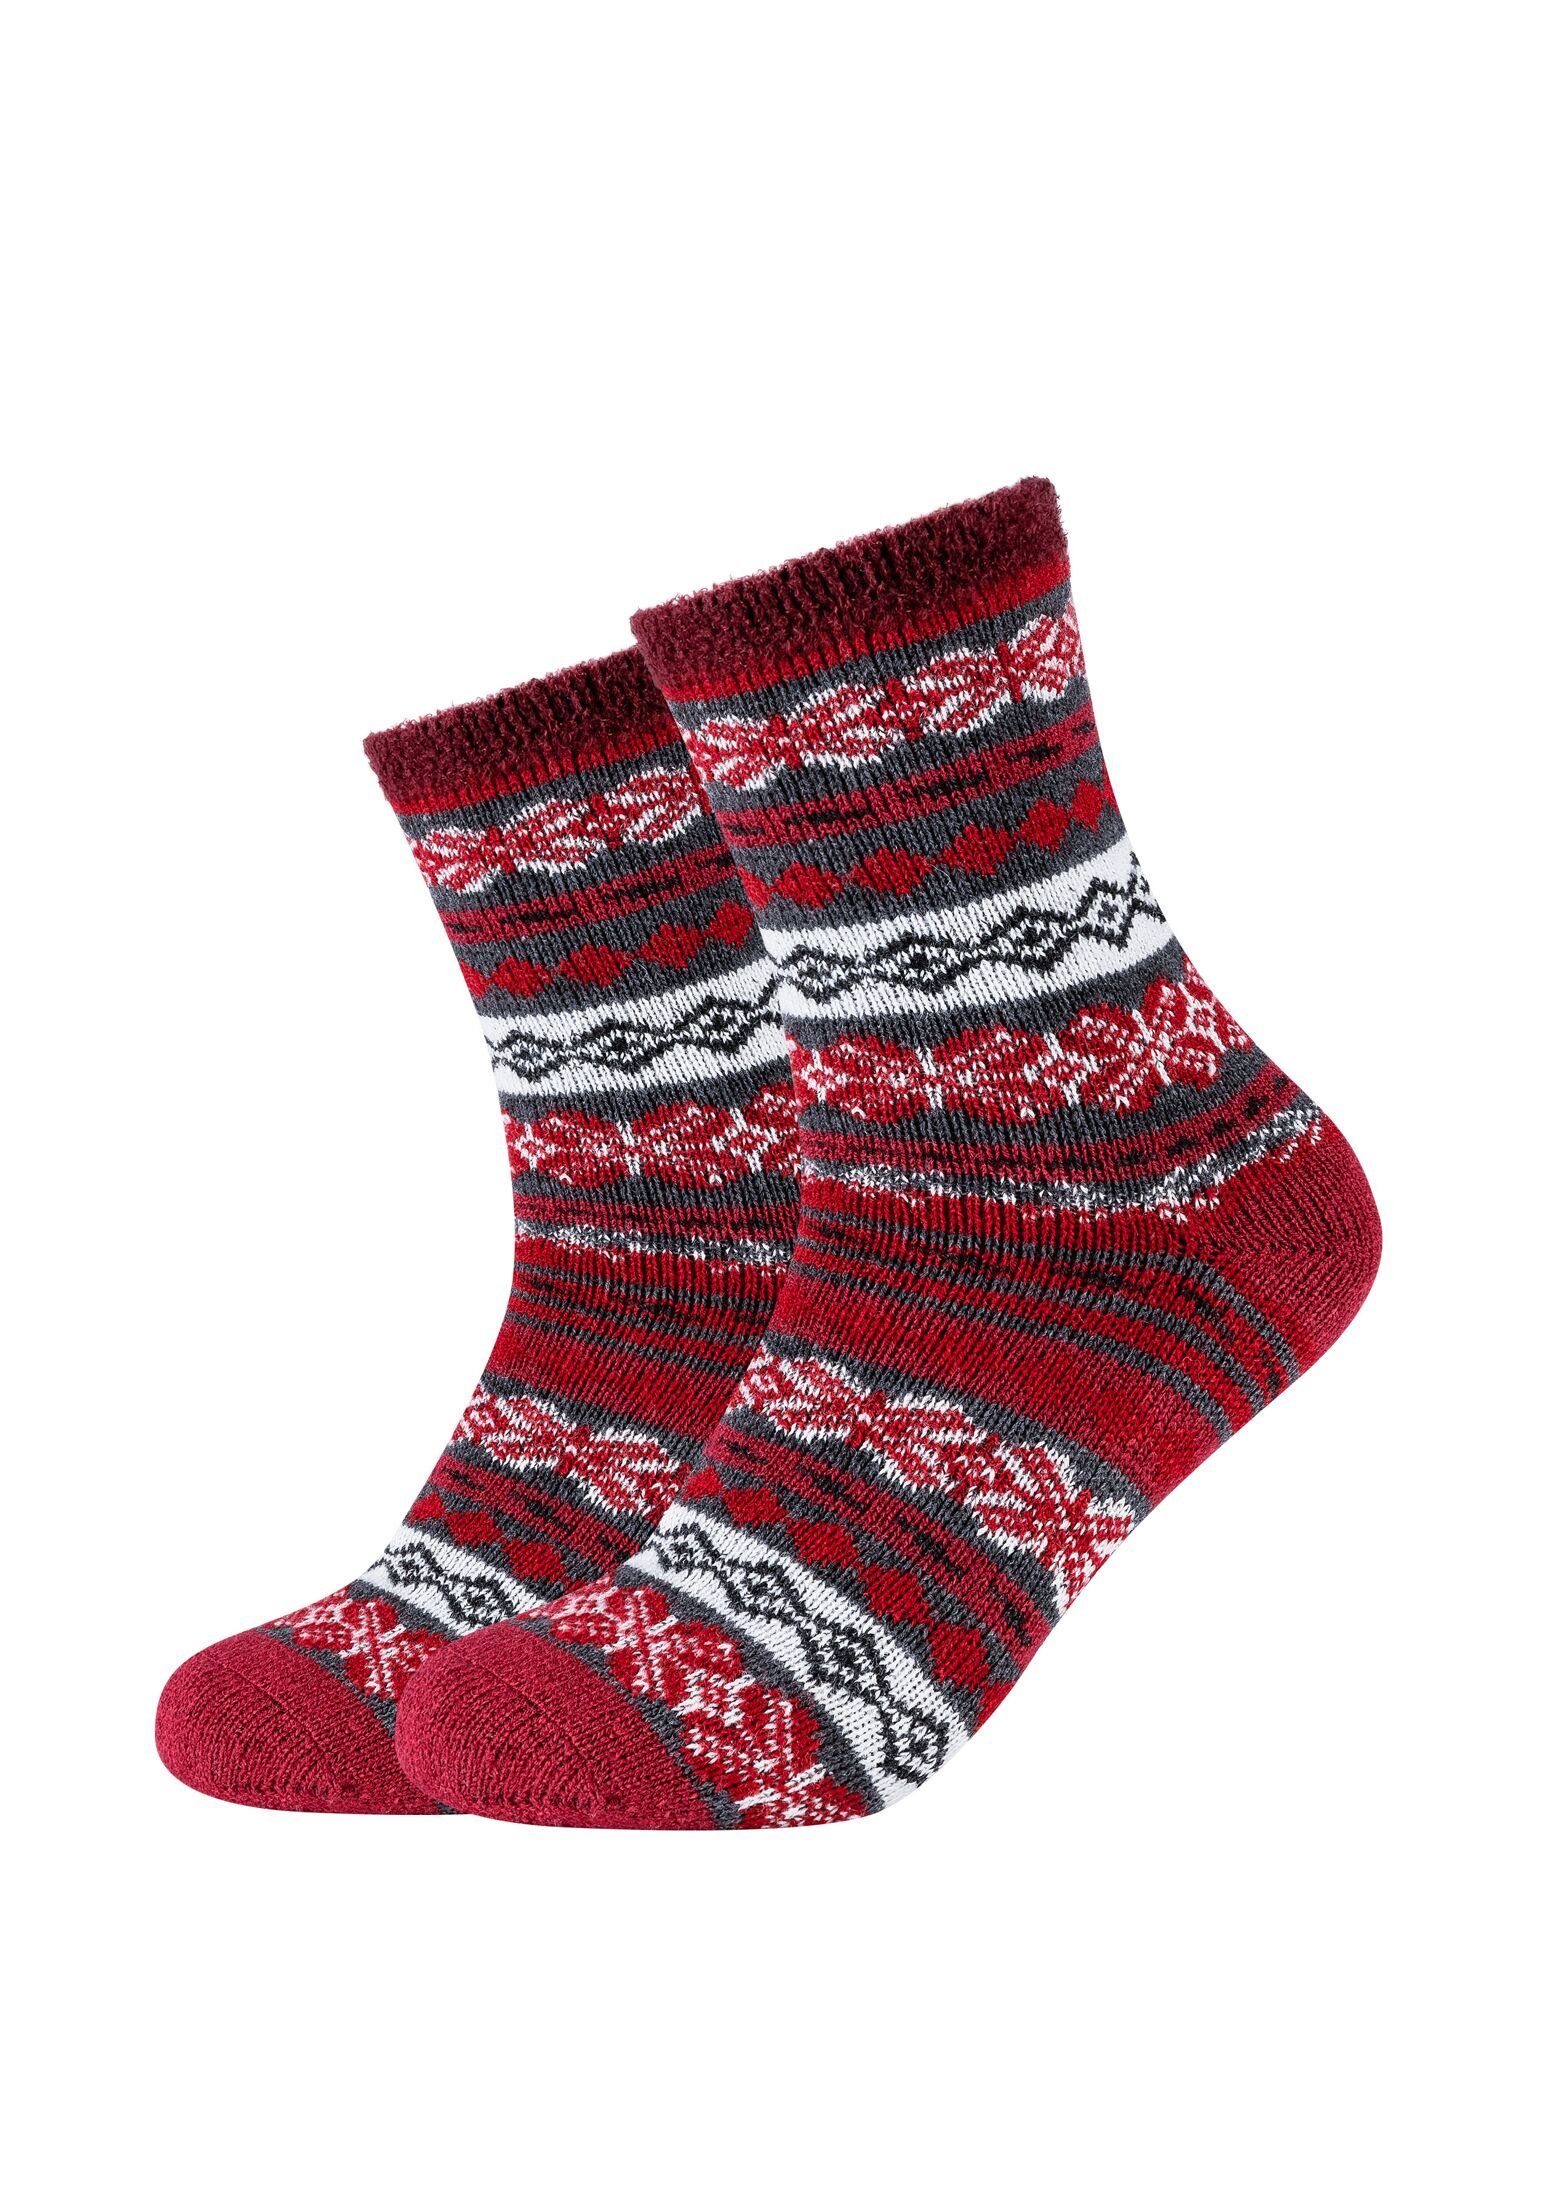 Damen Socken Flauschig Warm red oxblood Camano Socken Norweger Kuschelsocken Cosy